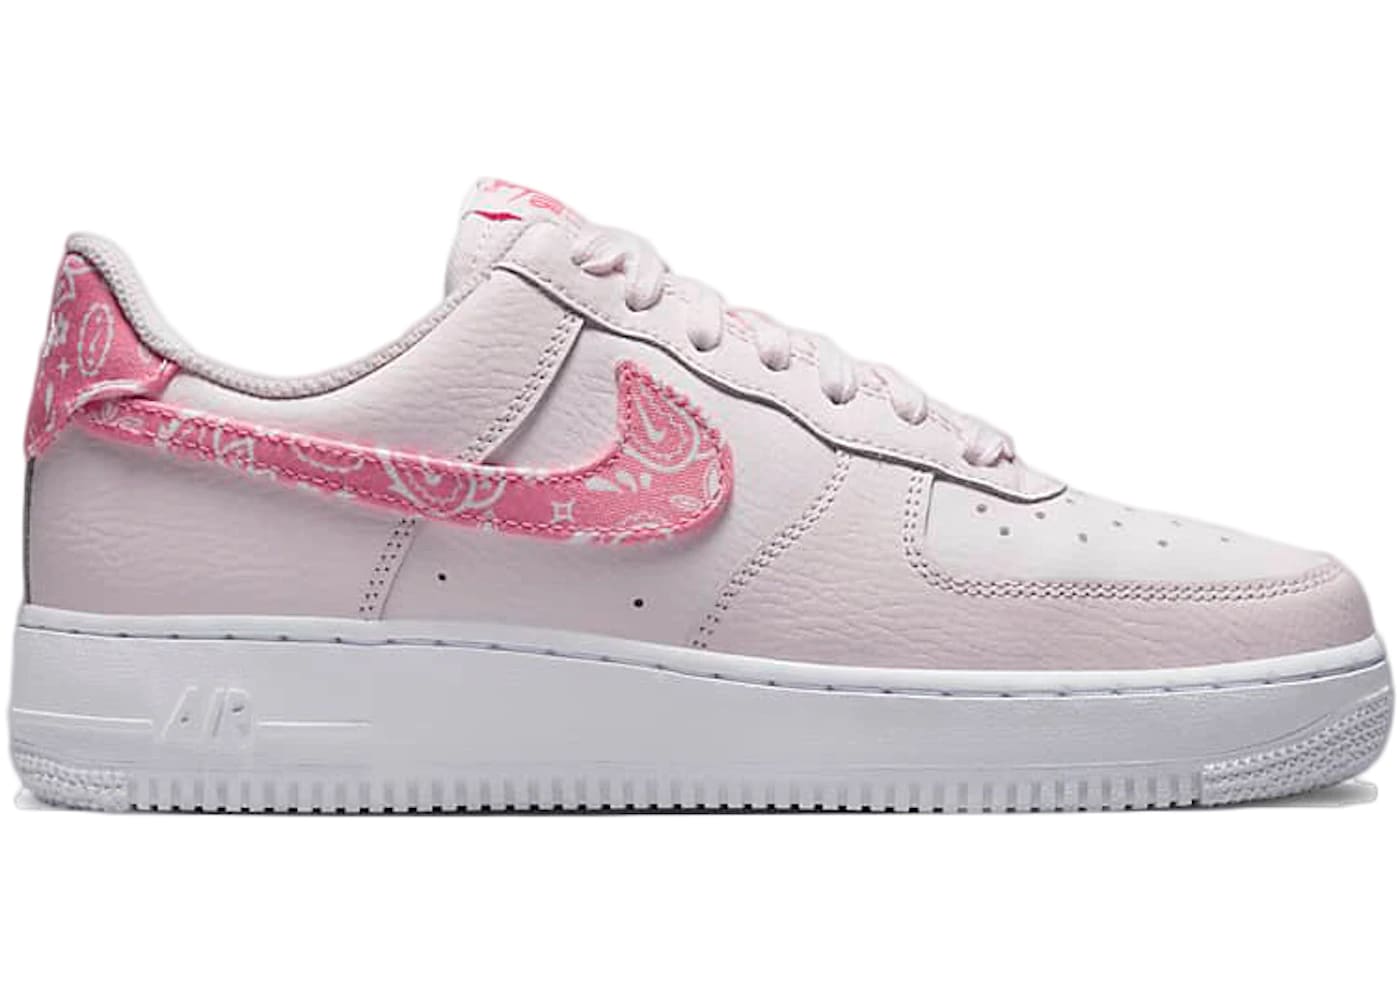 Nike Air Force 1 '07 Pink Paisley Sneakers